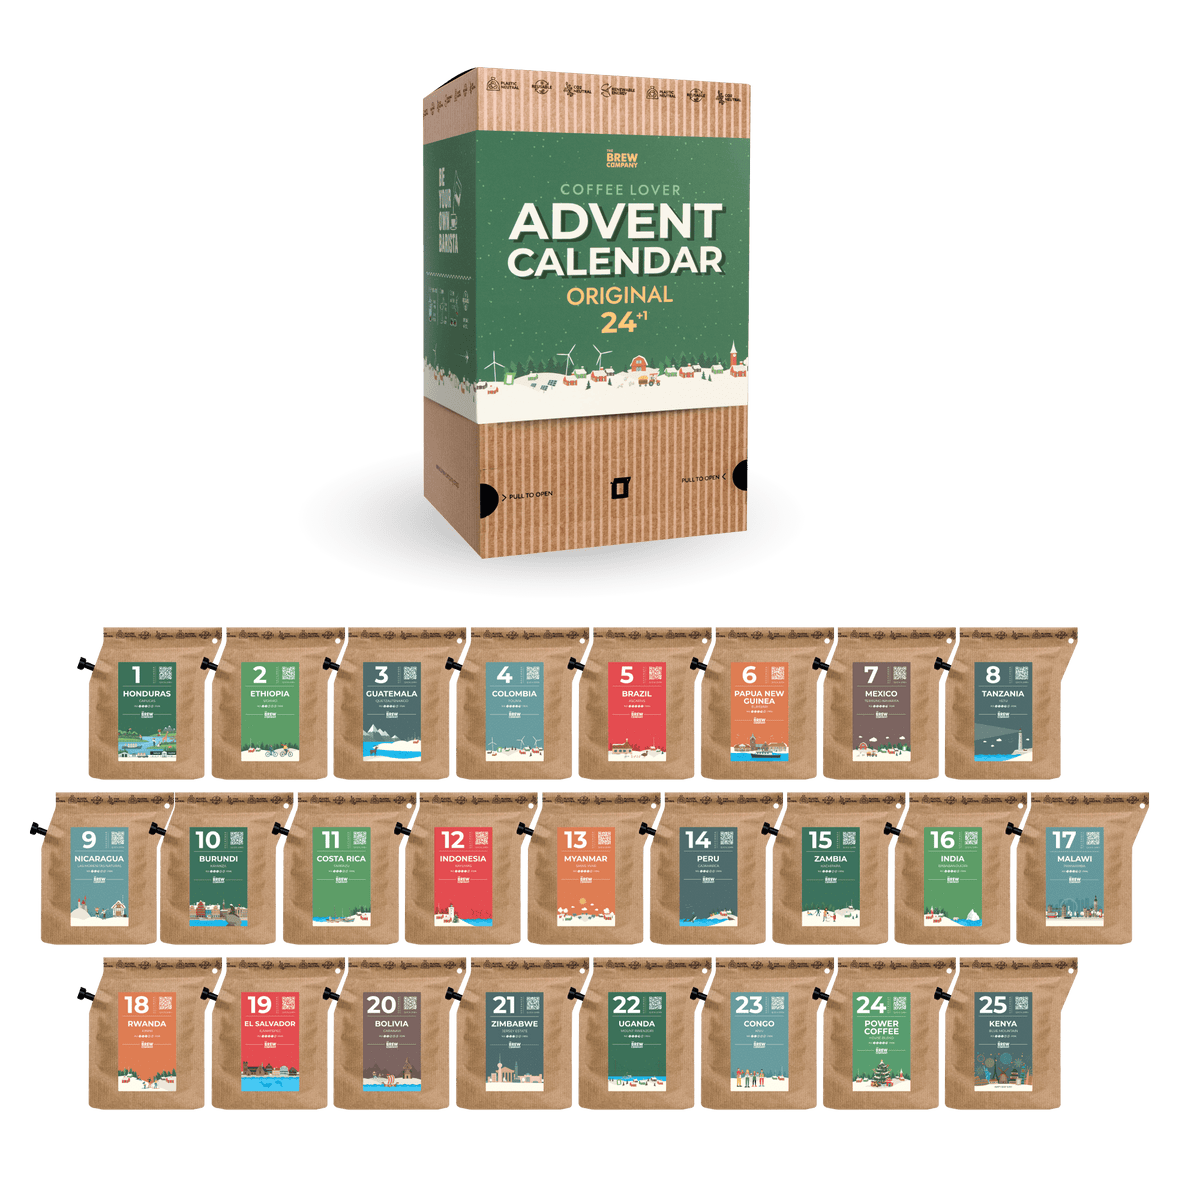 ORIGINAL COFFEE ADVENT CALENDAR Gift Boxes The Brew Company